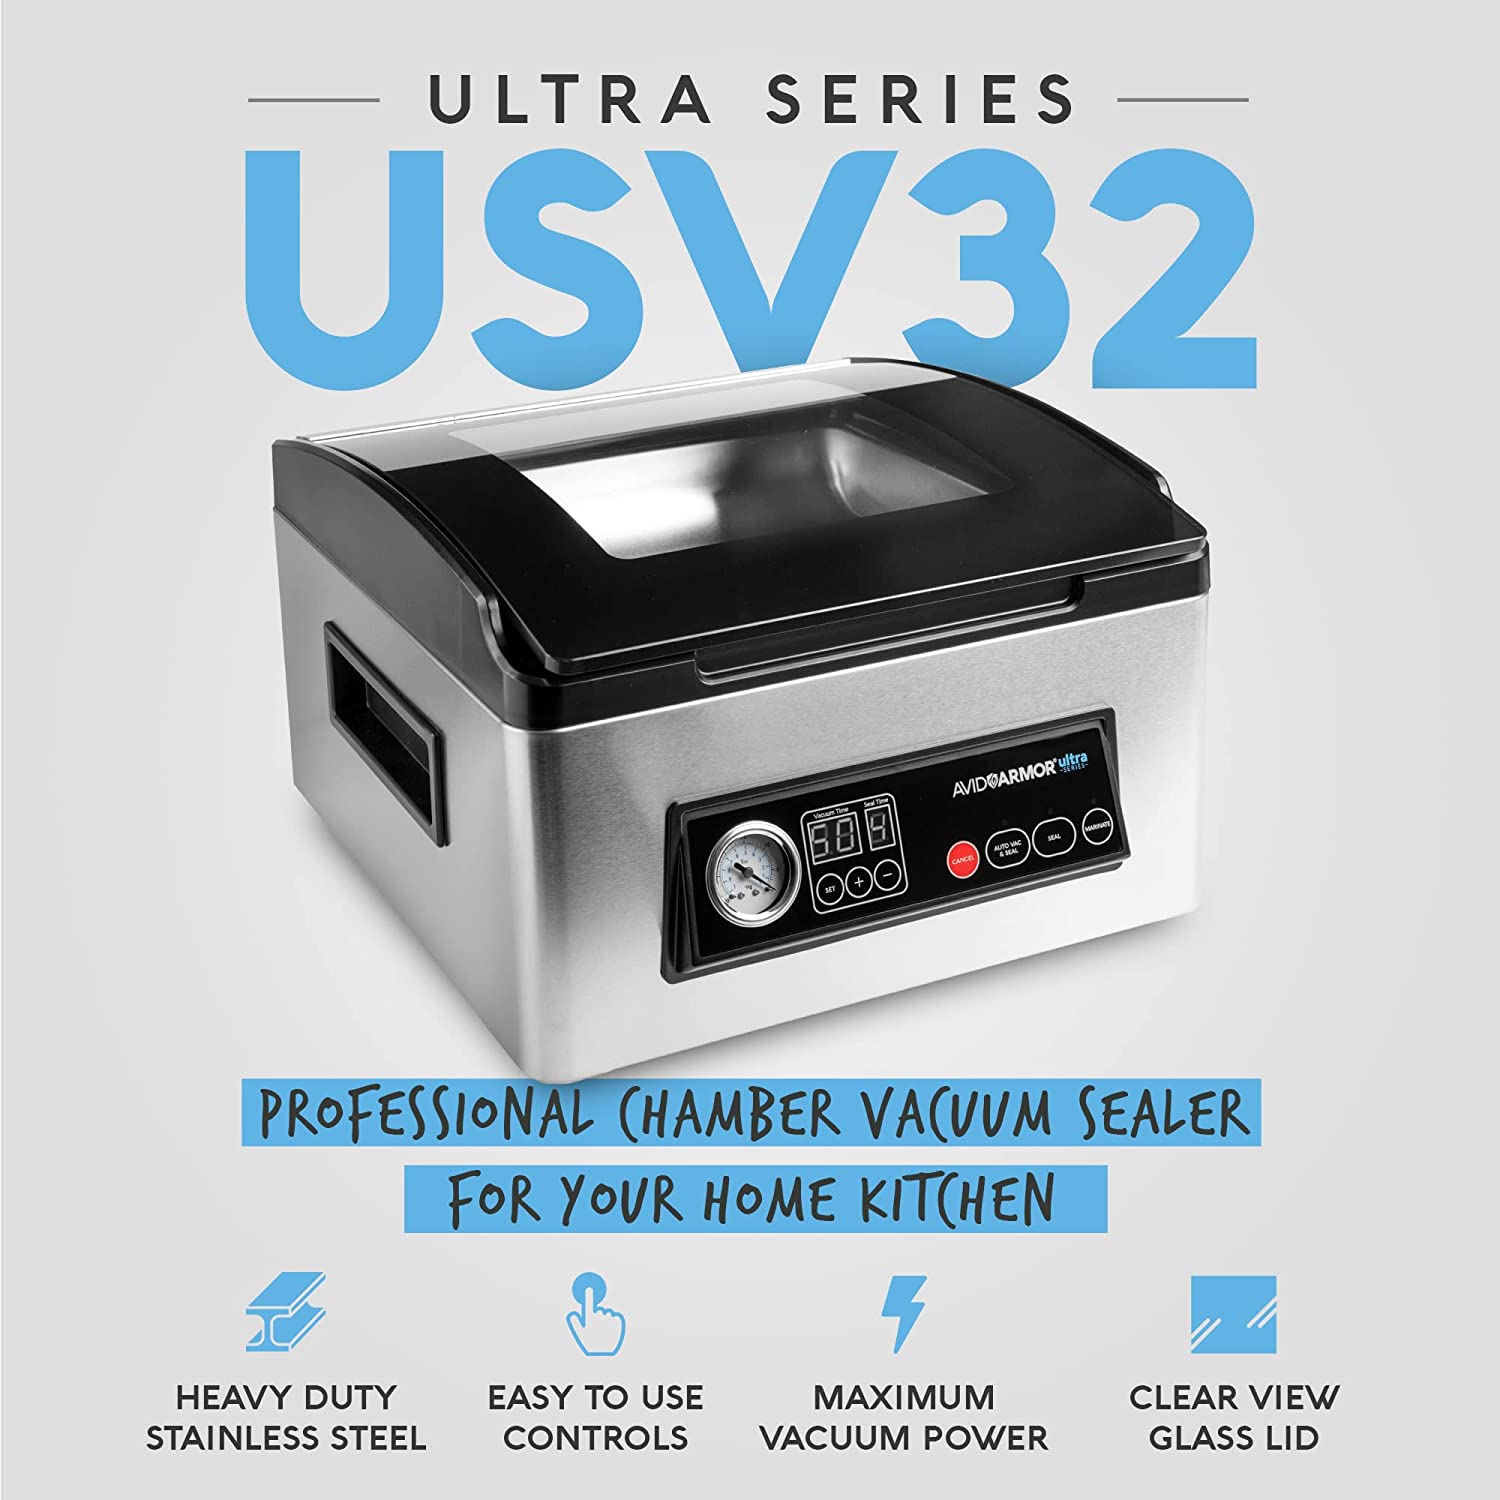 Avid Armor Ultra Series USV32 Stainless Steel Food Vacuum Sealer Machine, Professional Bag Sealer and Food Saver - image 3 of 10